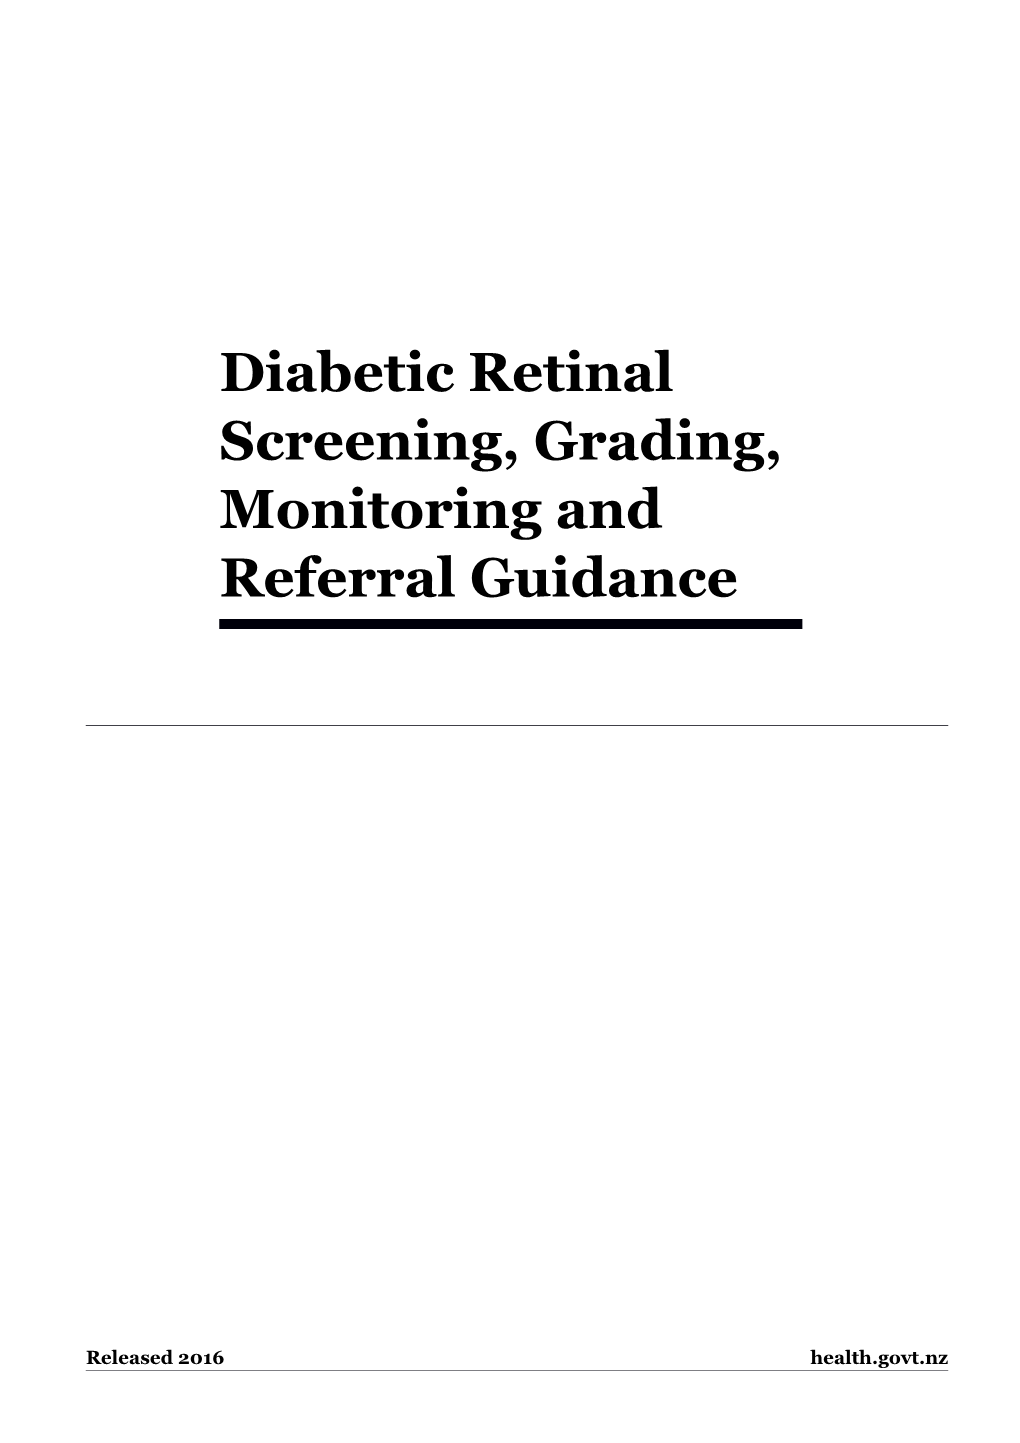 Diabetic Retinal Screening, Grading, Monitoring and Referral Guidance